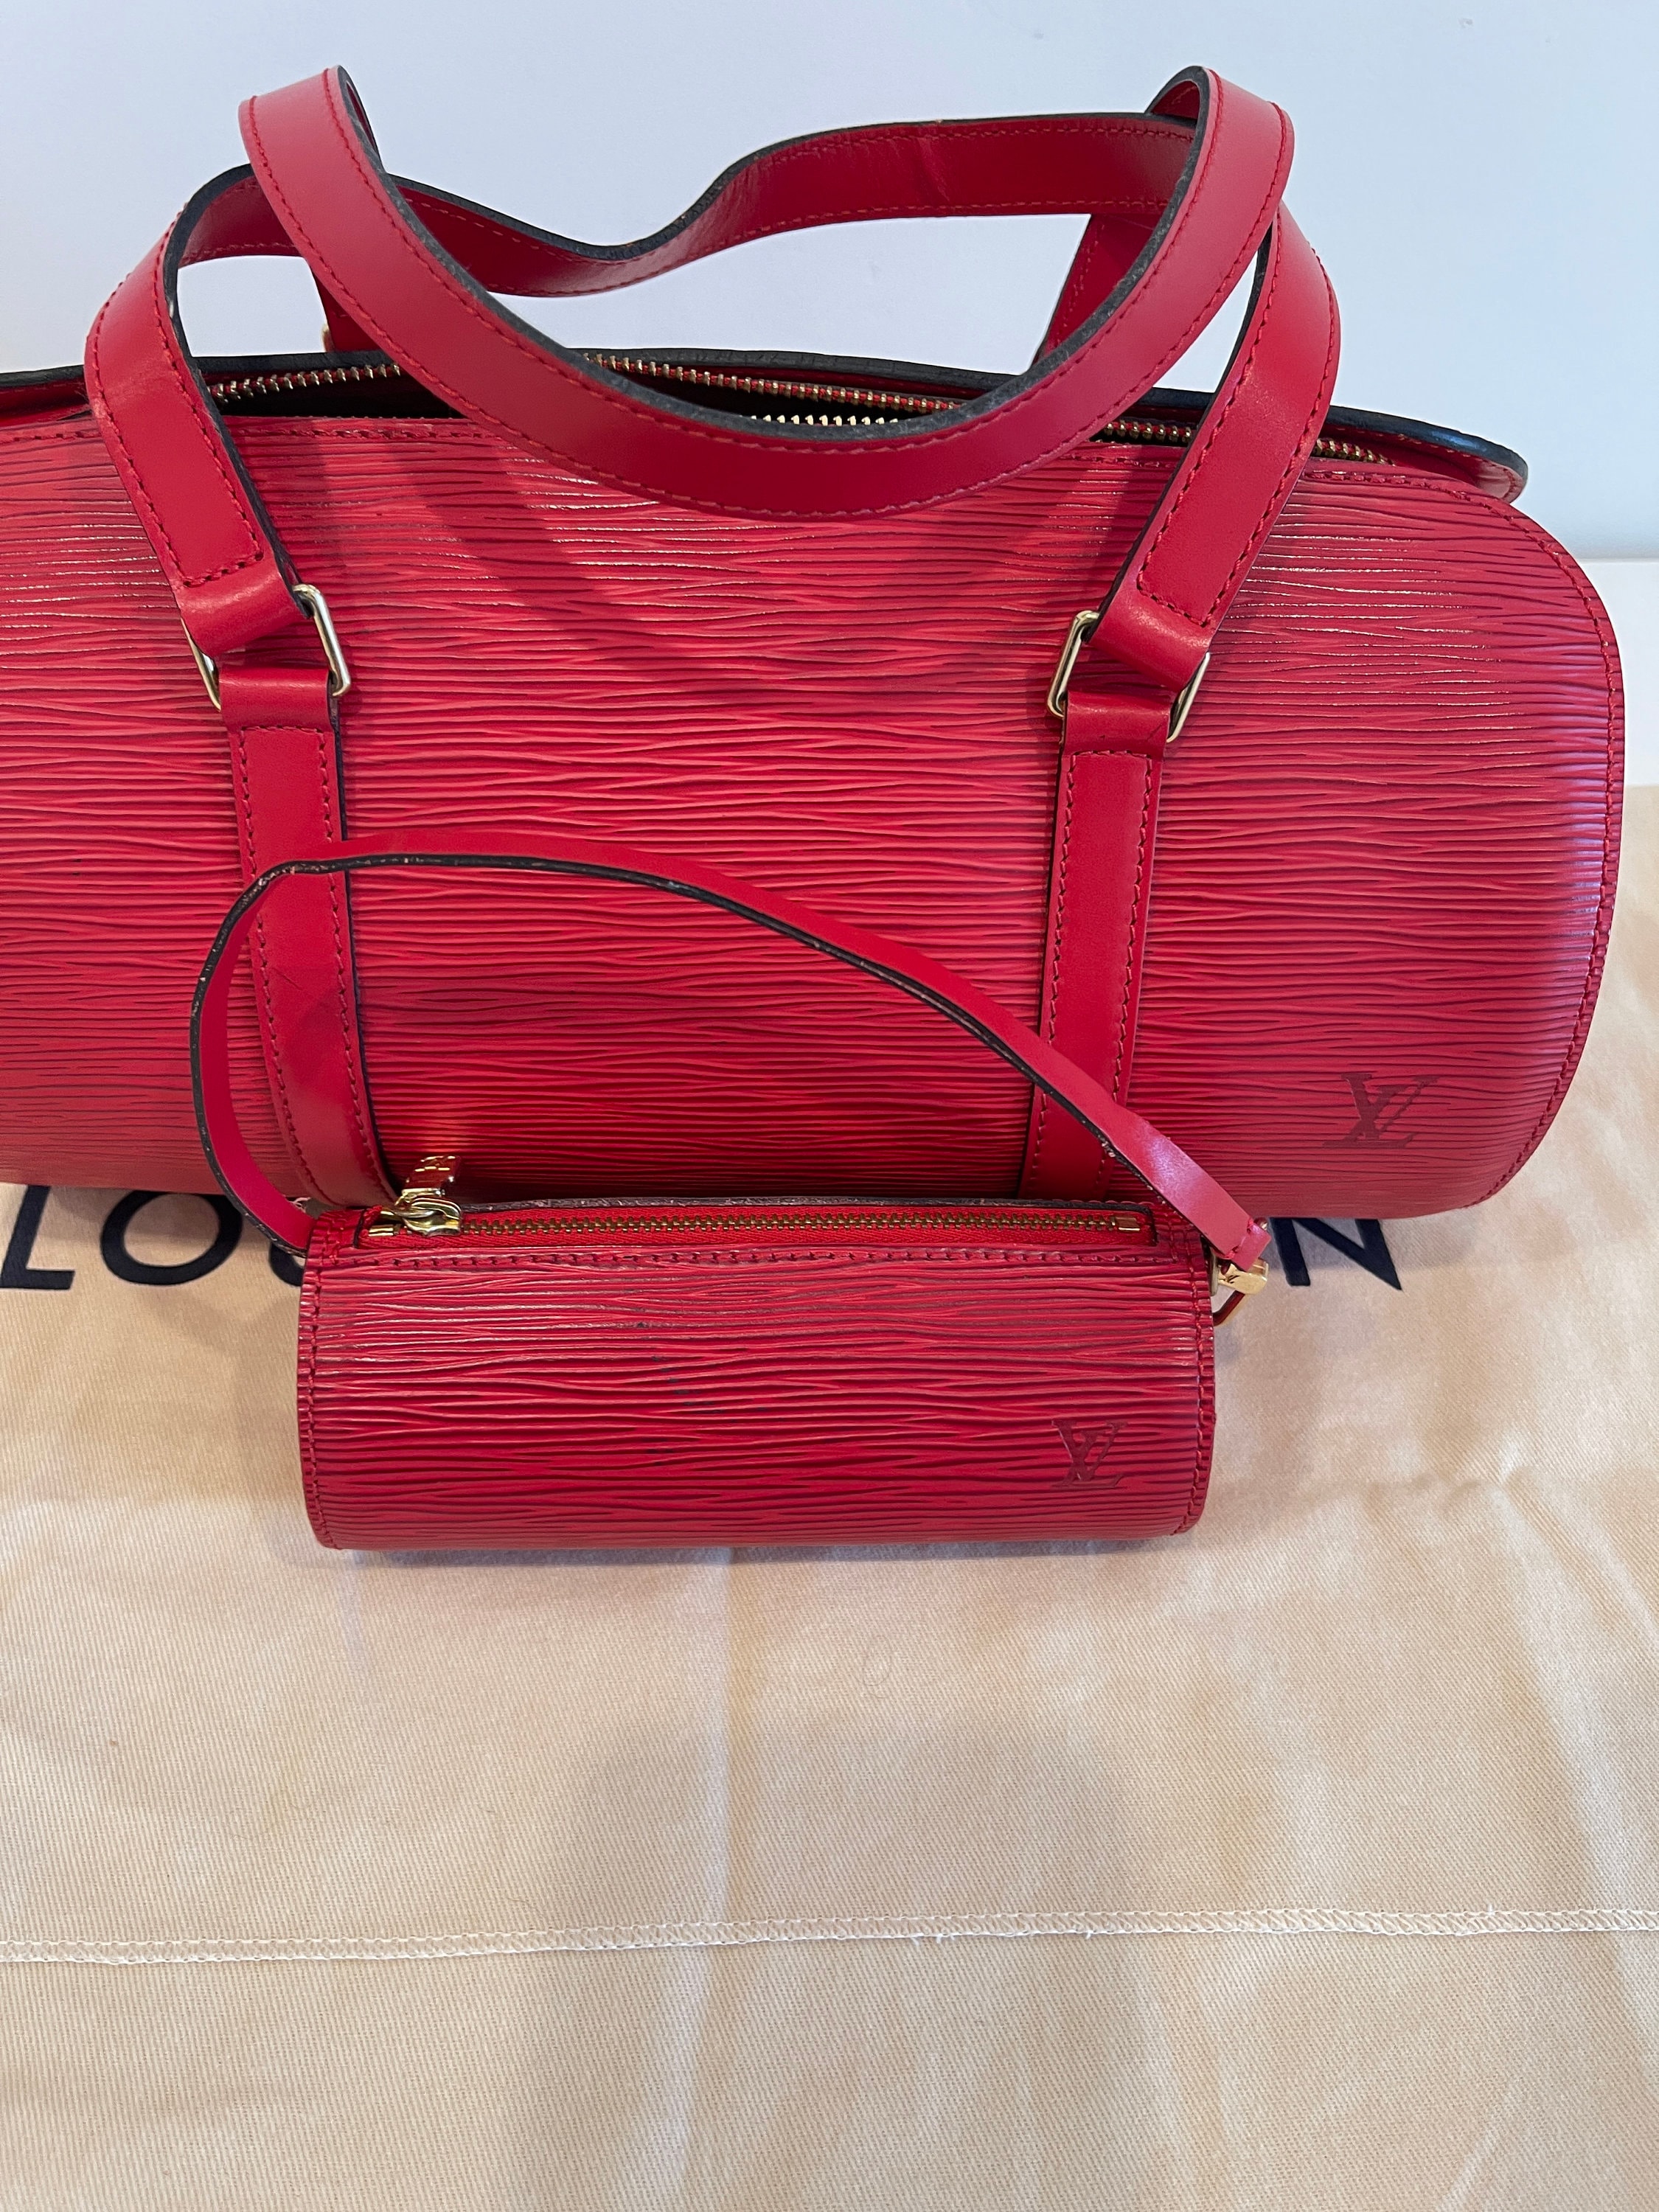 Louis Vuitton Red Epi Leather Mini Papillon Pochette Bag